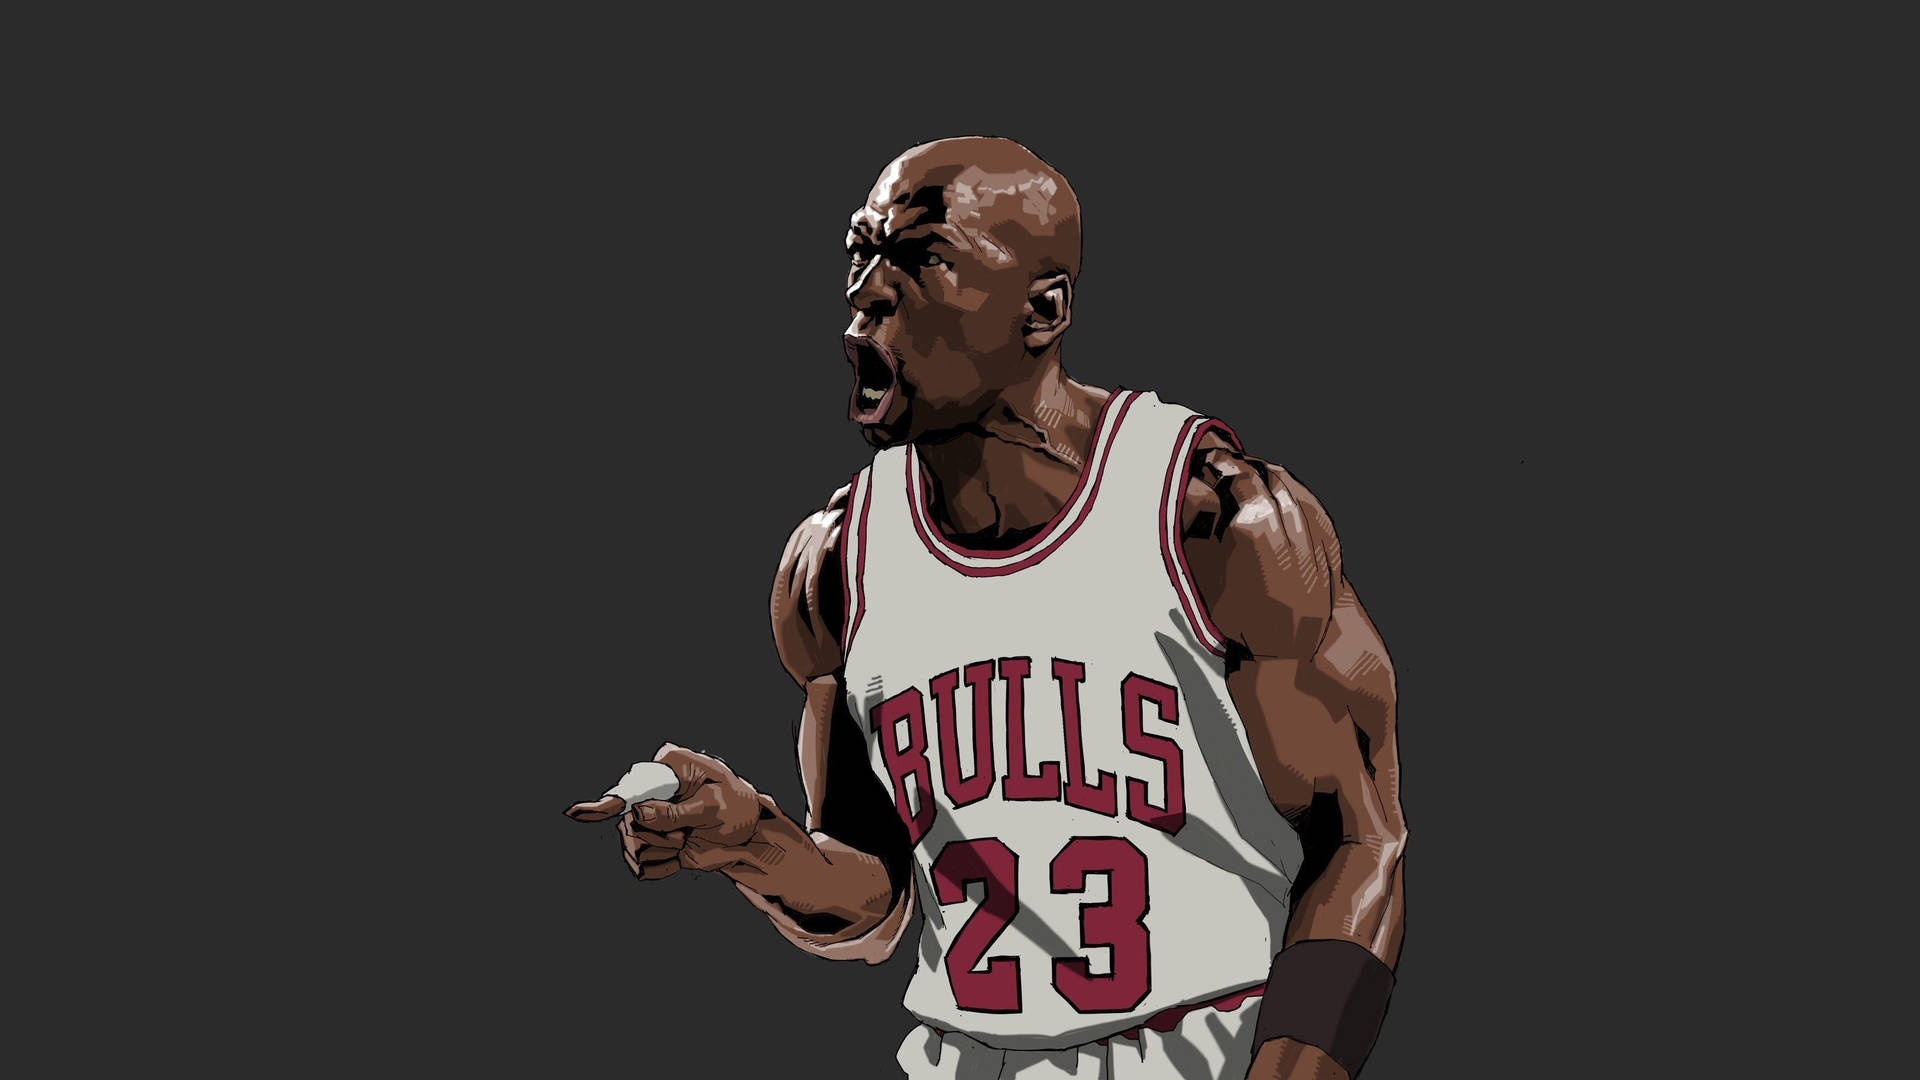 Furious Michael Jordan Wallpaper